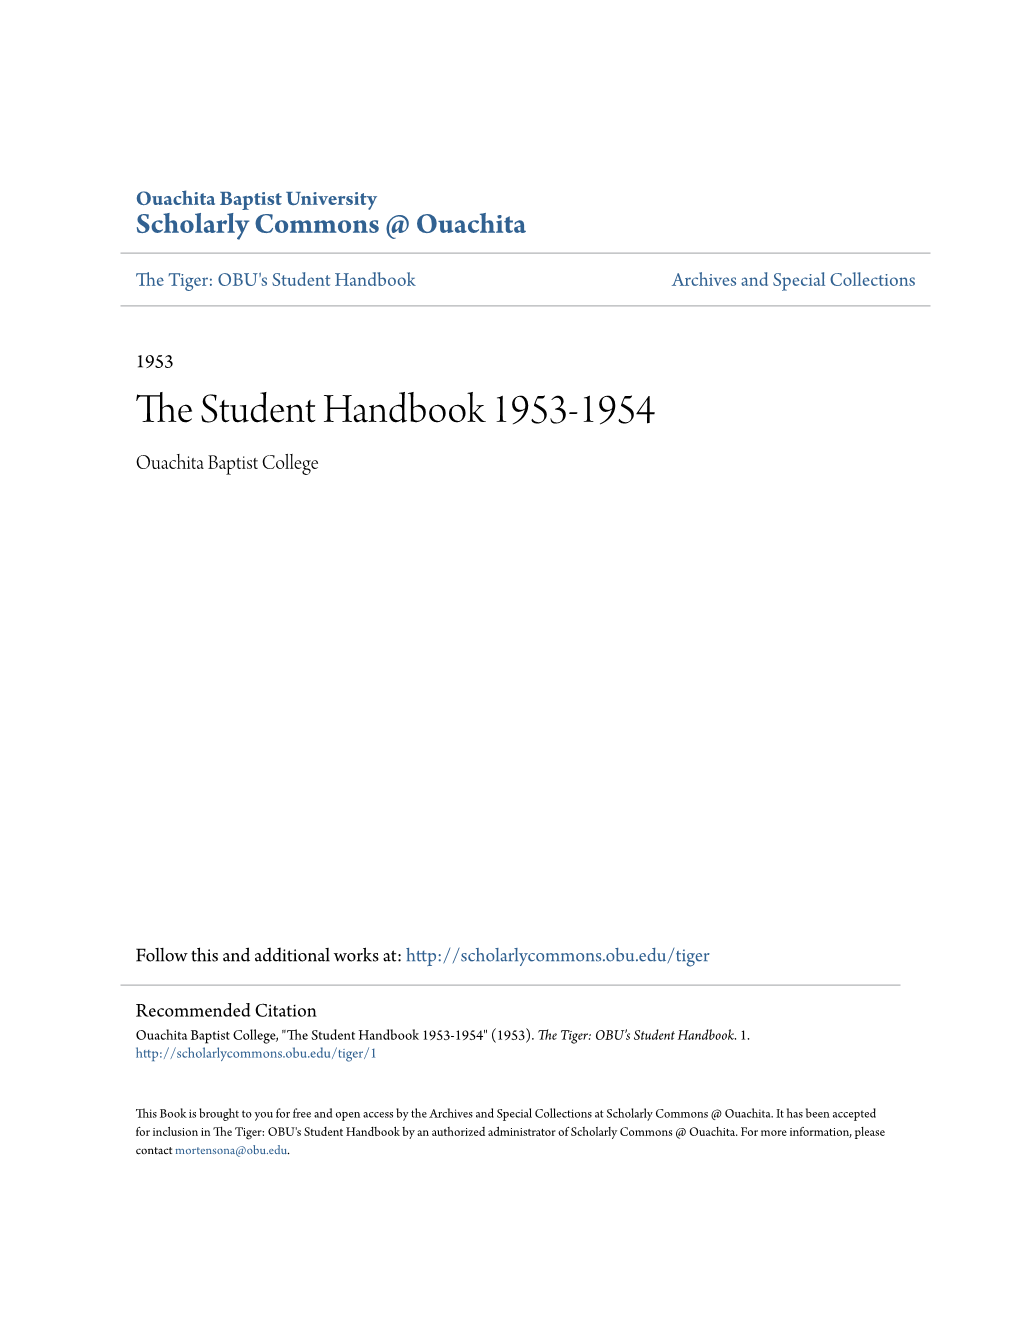 The Student Handbook 1953-1954